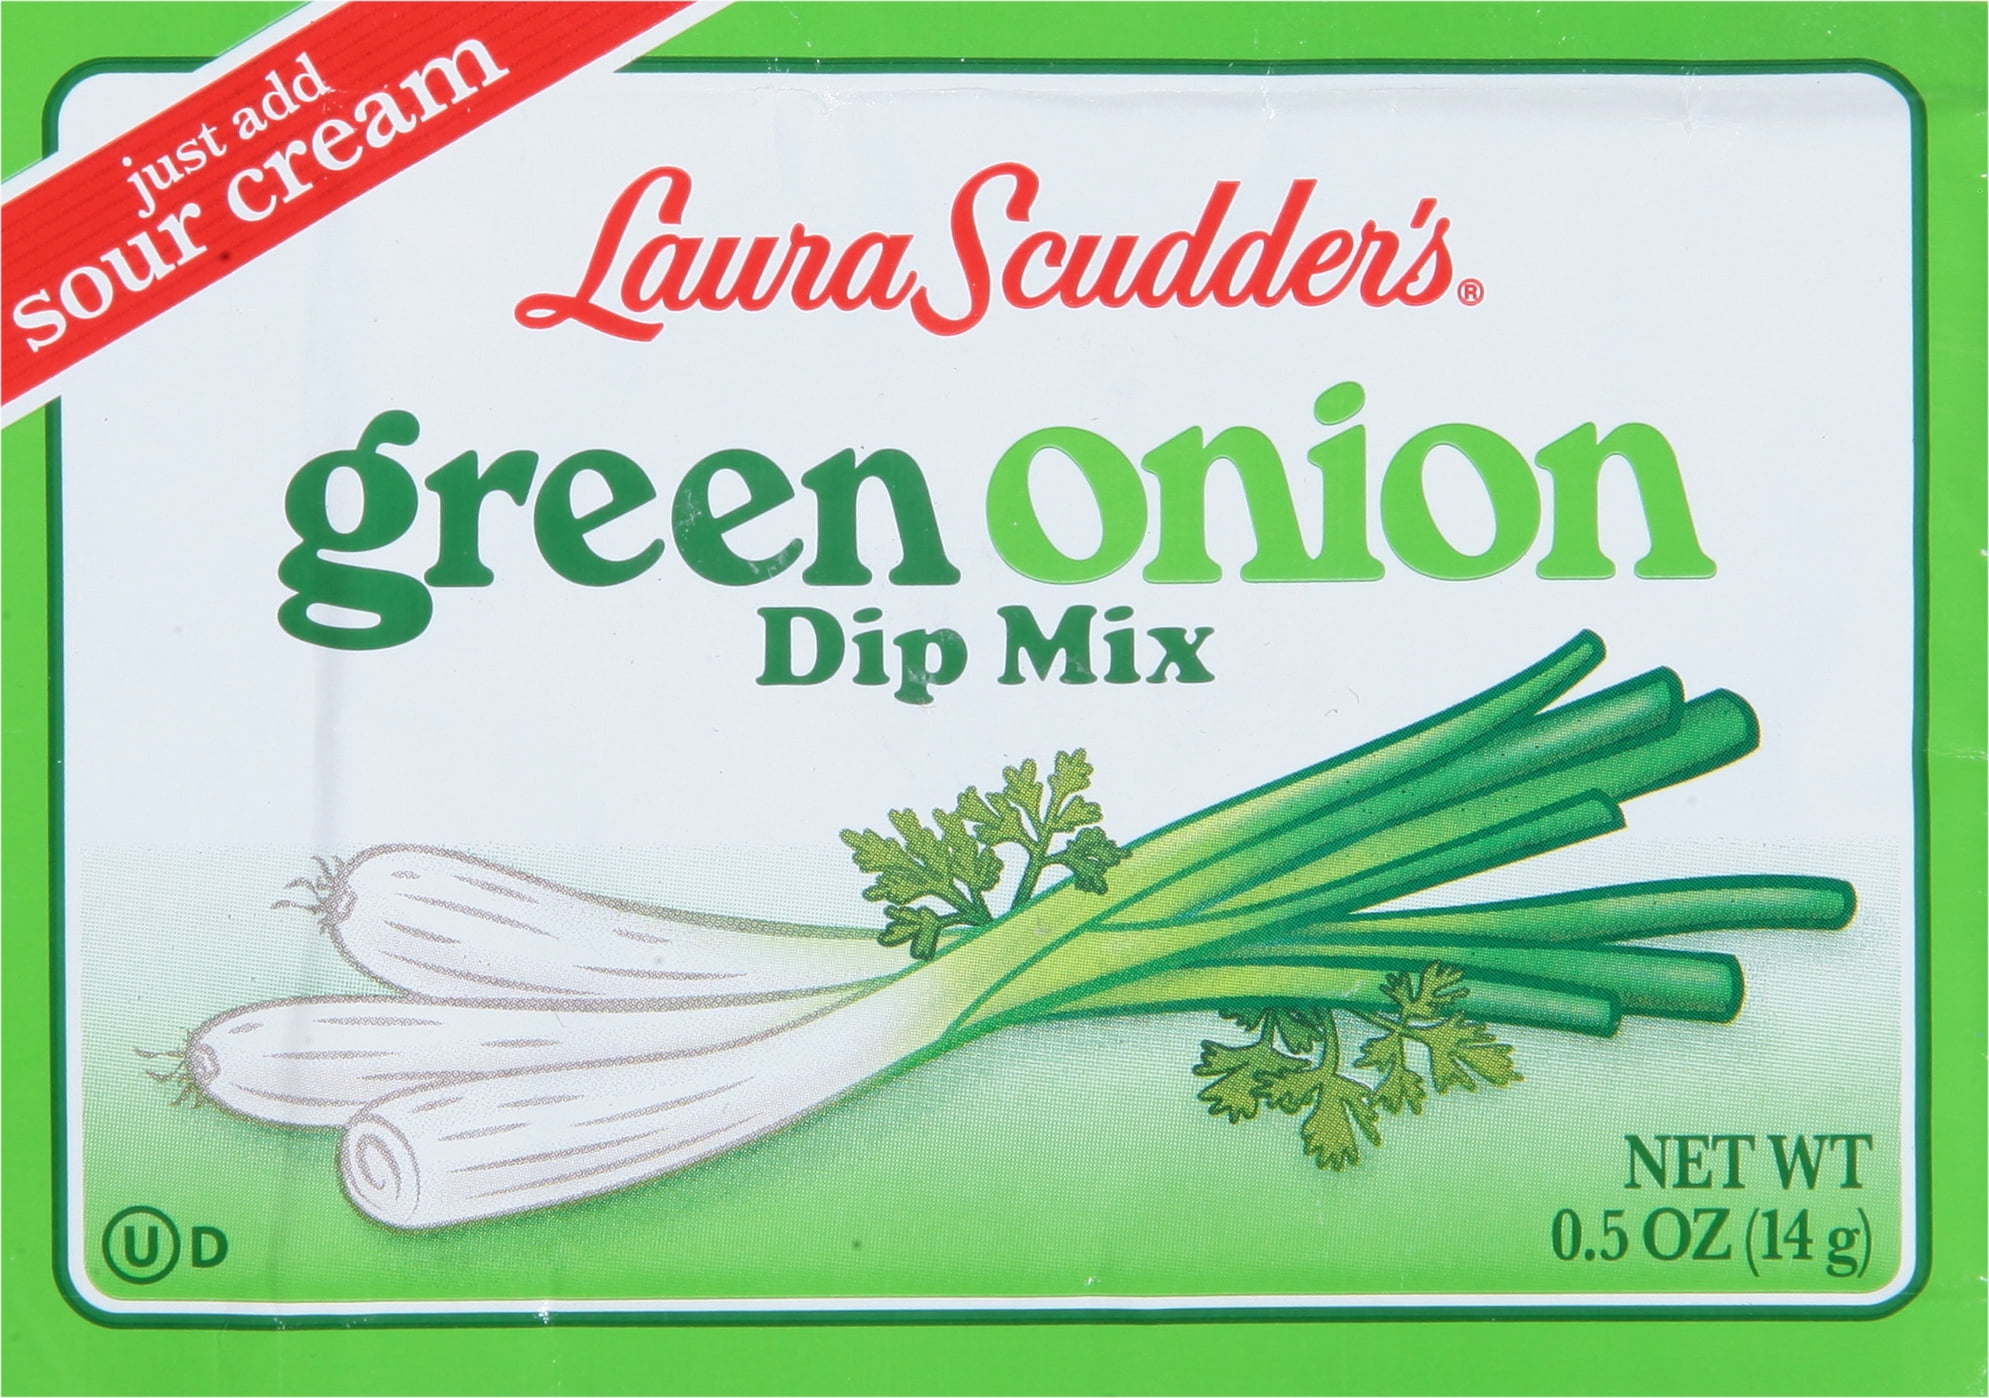 Laura Scudder's Green Onion Dip Mix, 0.5 Oz.